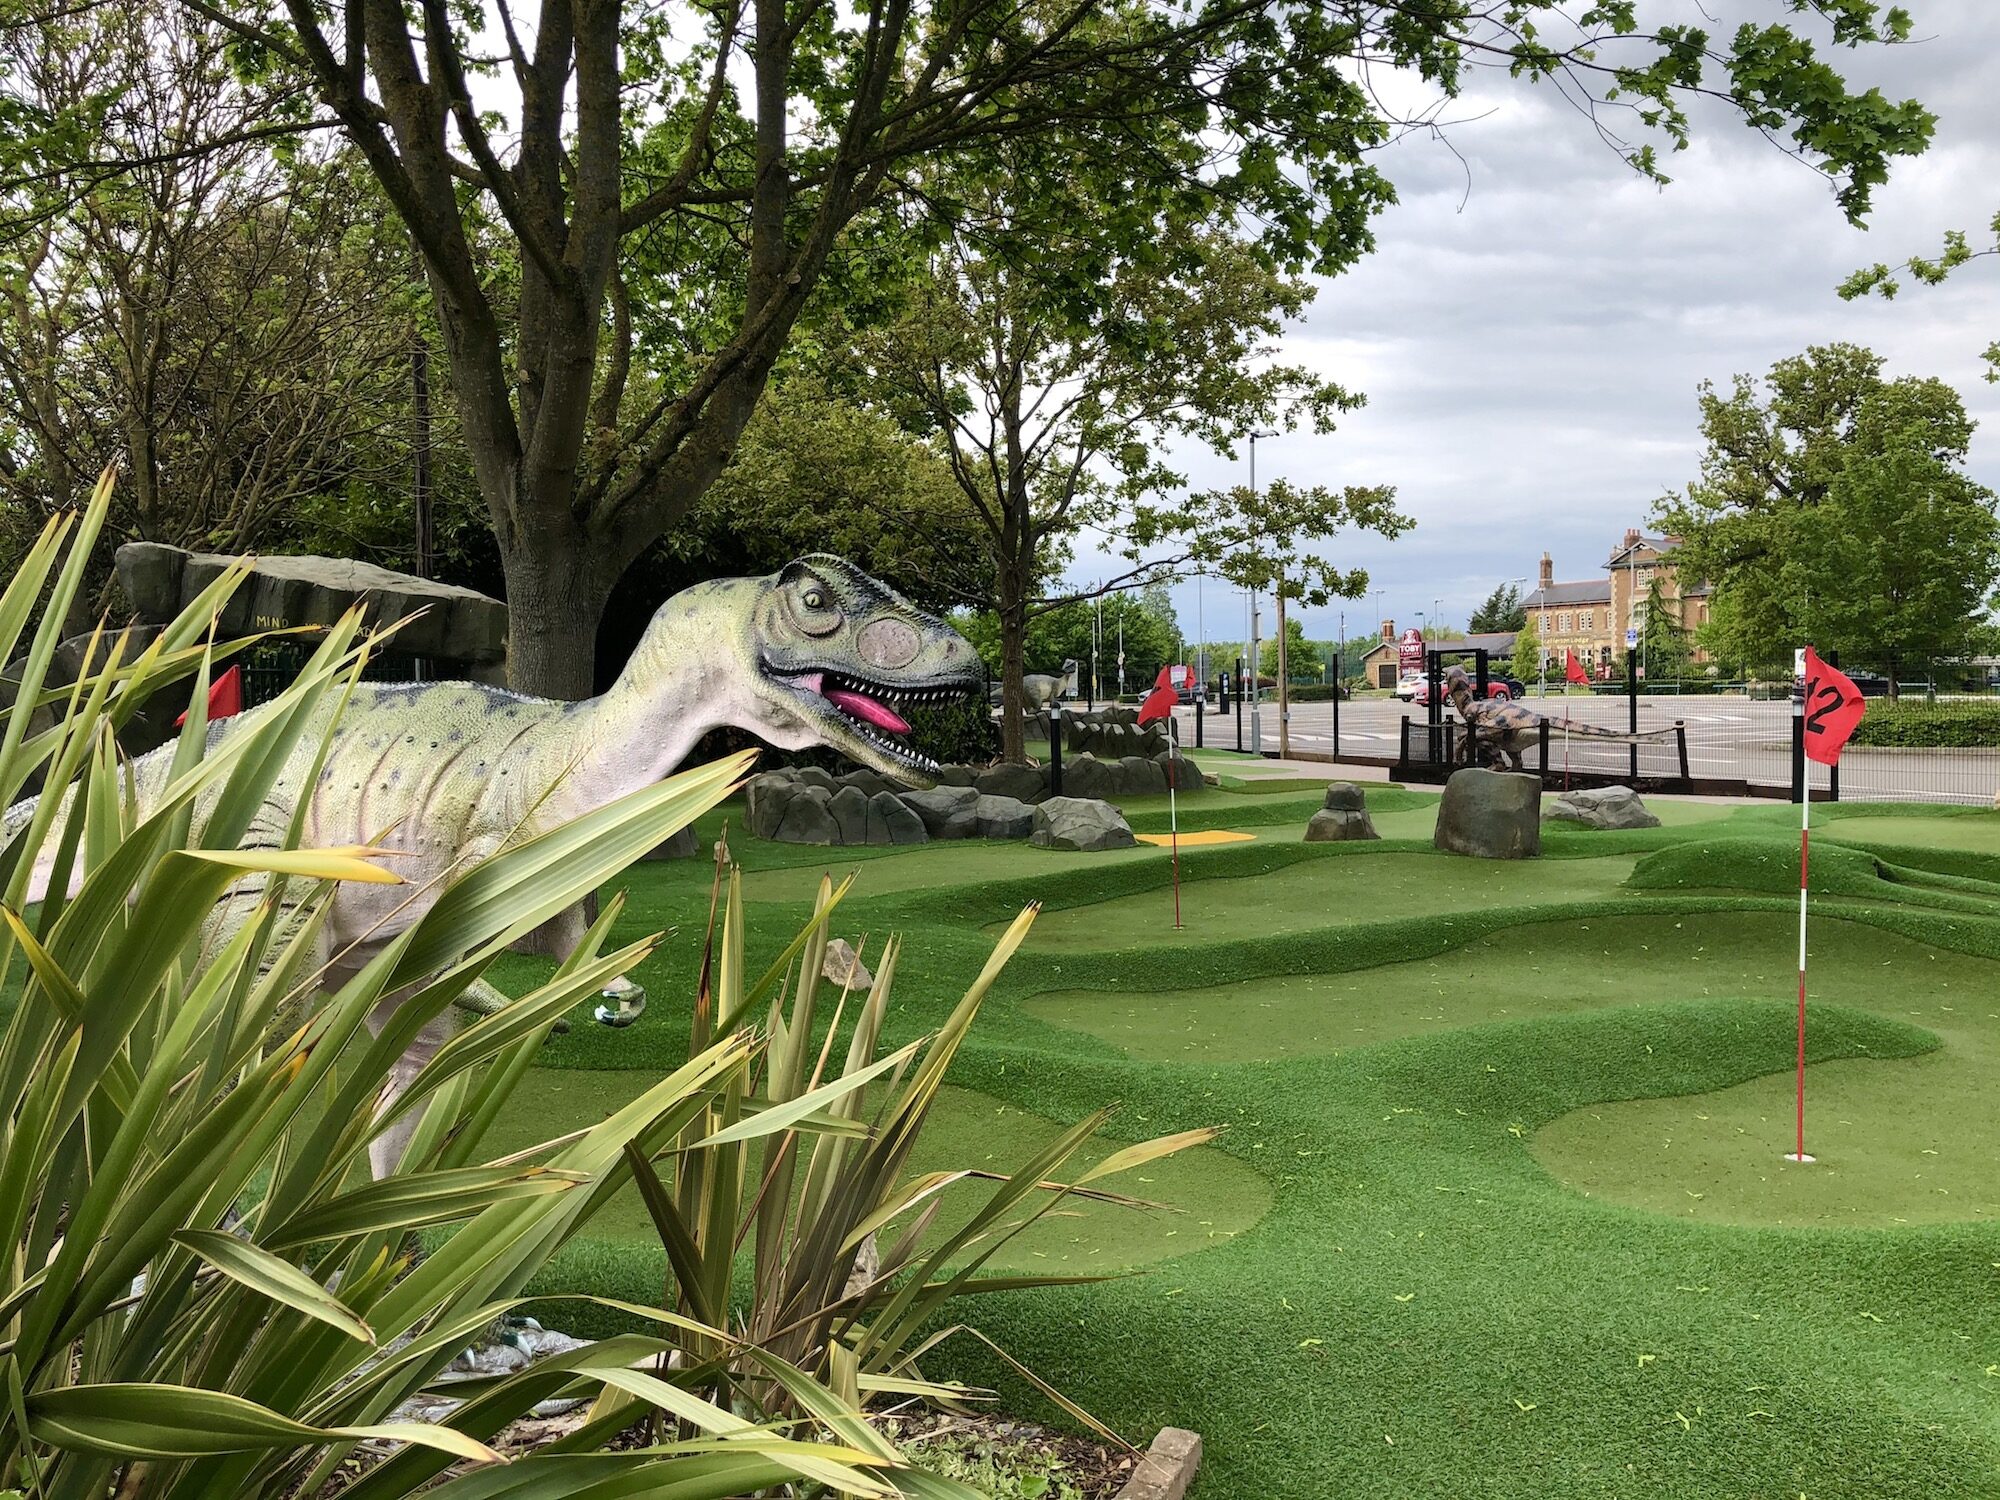 Maidenhead Mini-Golf Dinosaur fun for the entire family